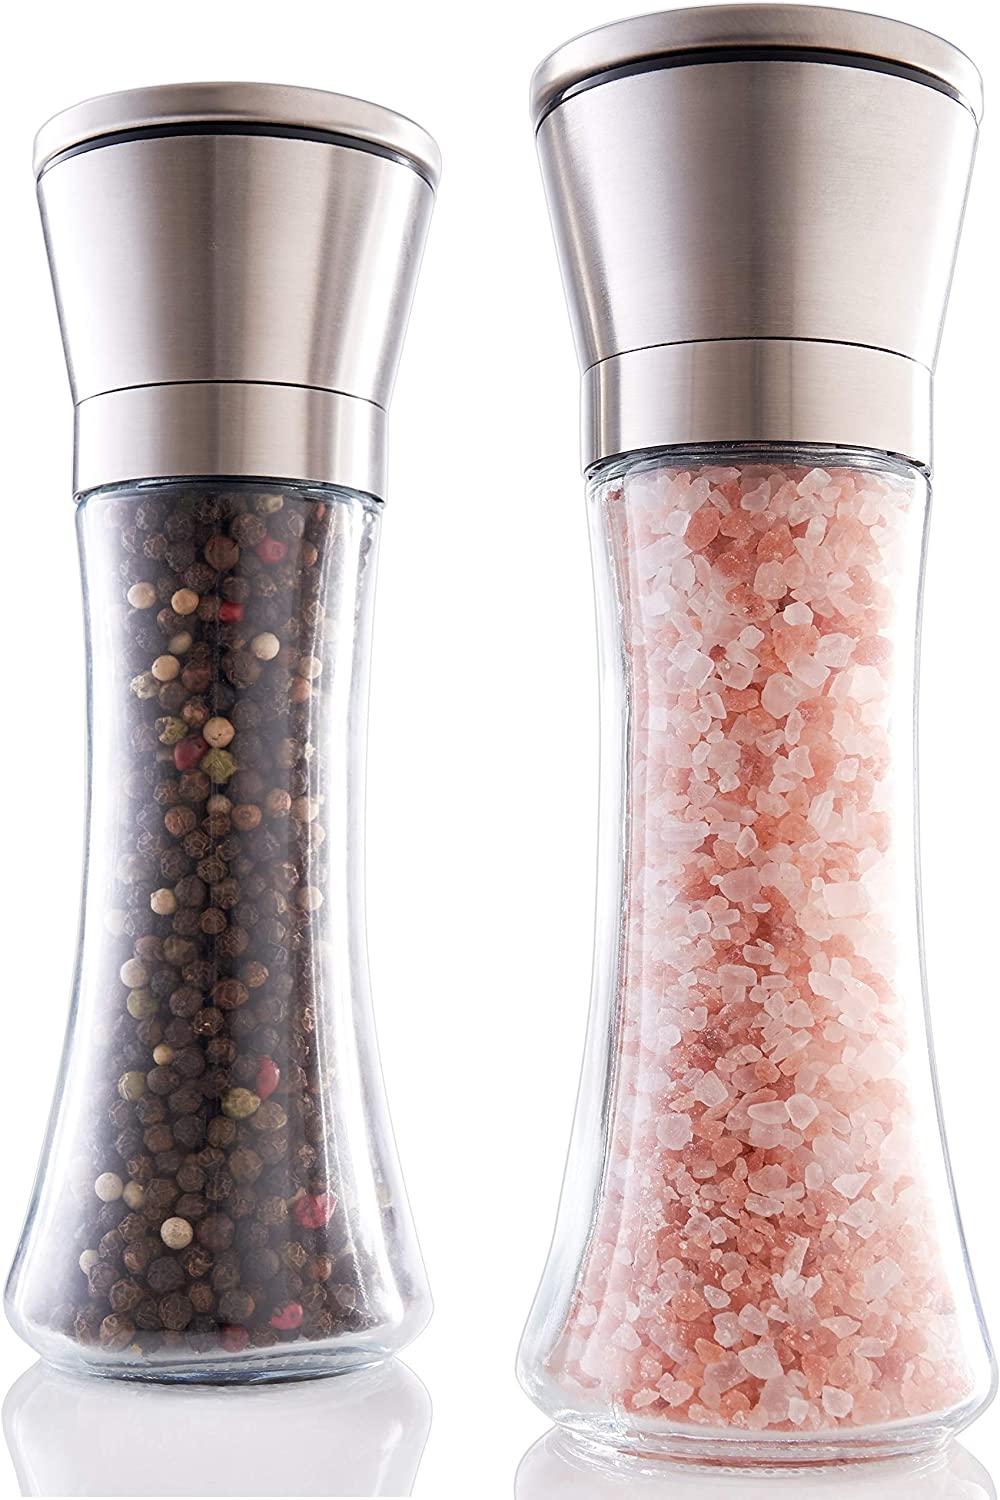 https://www.dontwasteyourmoney.com/wp-content/uploads/2021/04/kibaga-refillable-salt-and-pepper-grinder-set-salt-and-pepper-grinder-set.jpg